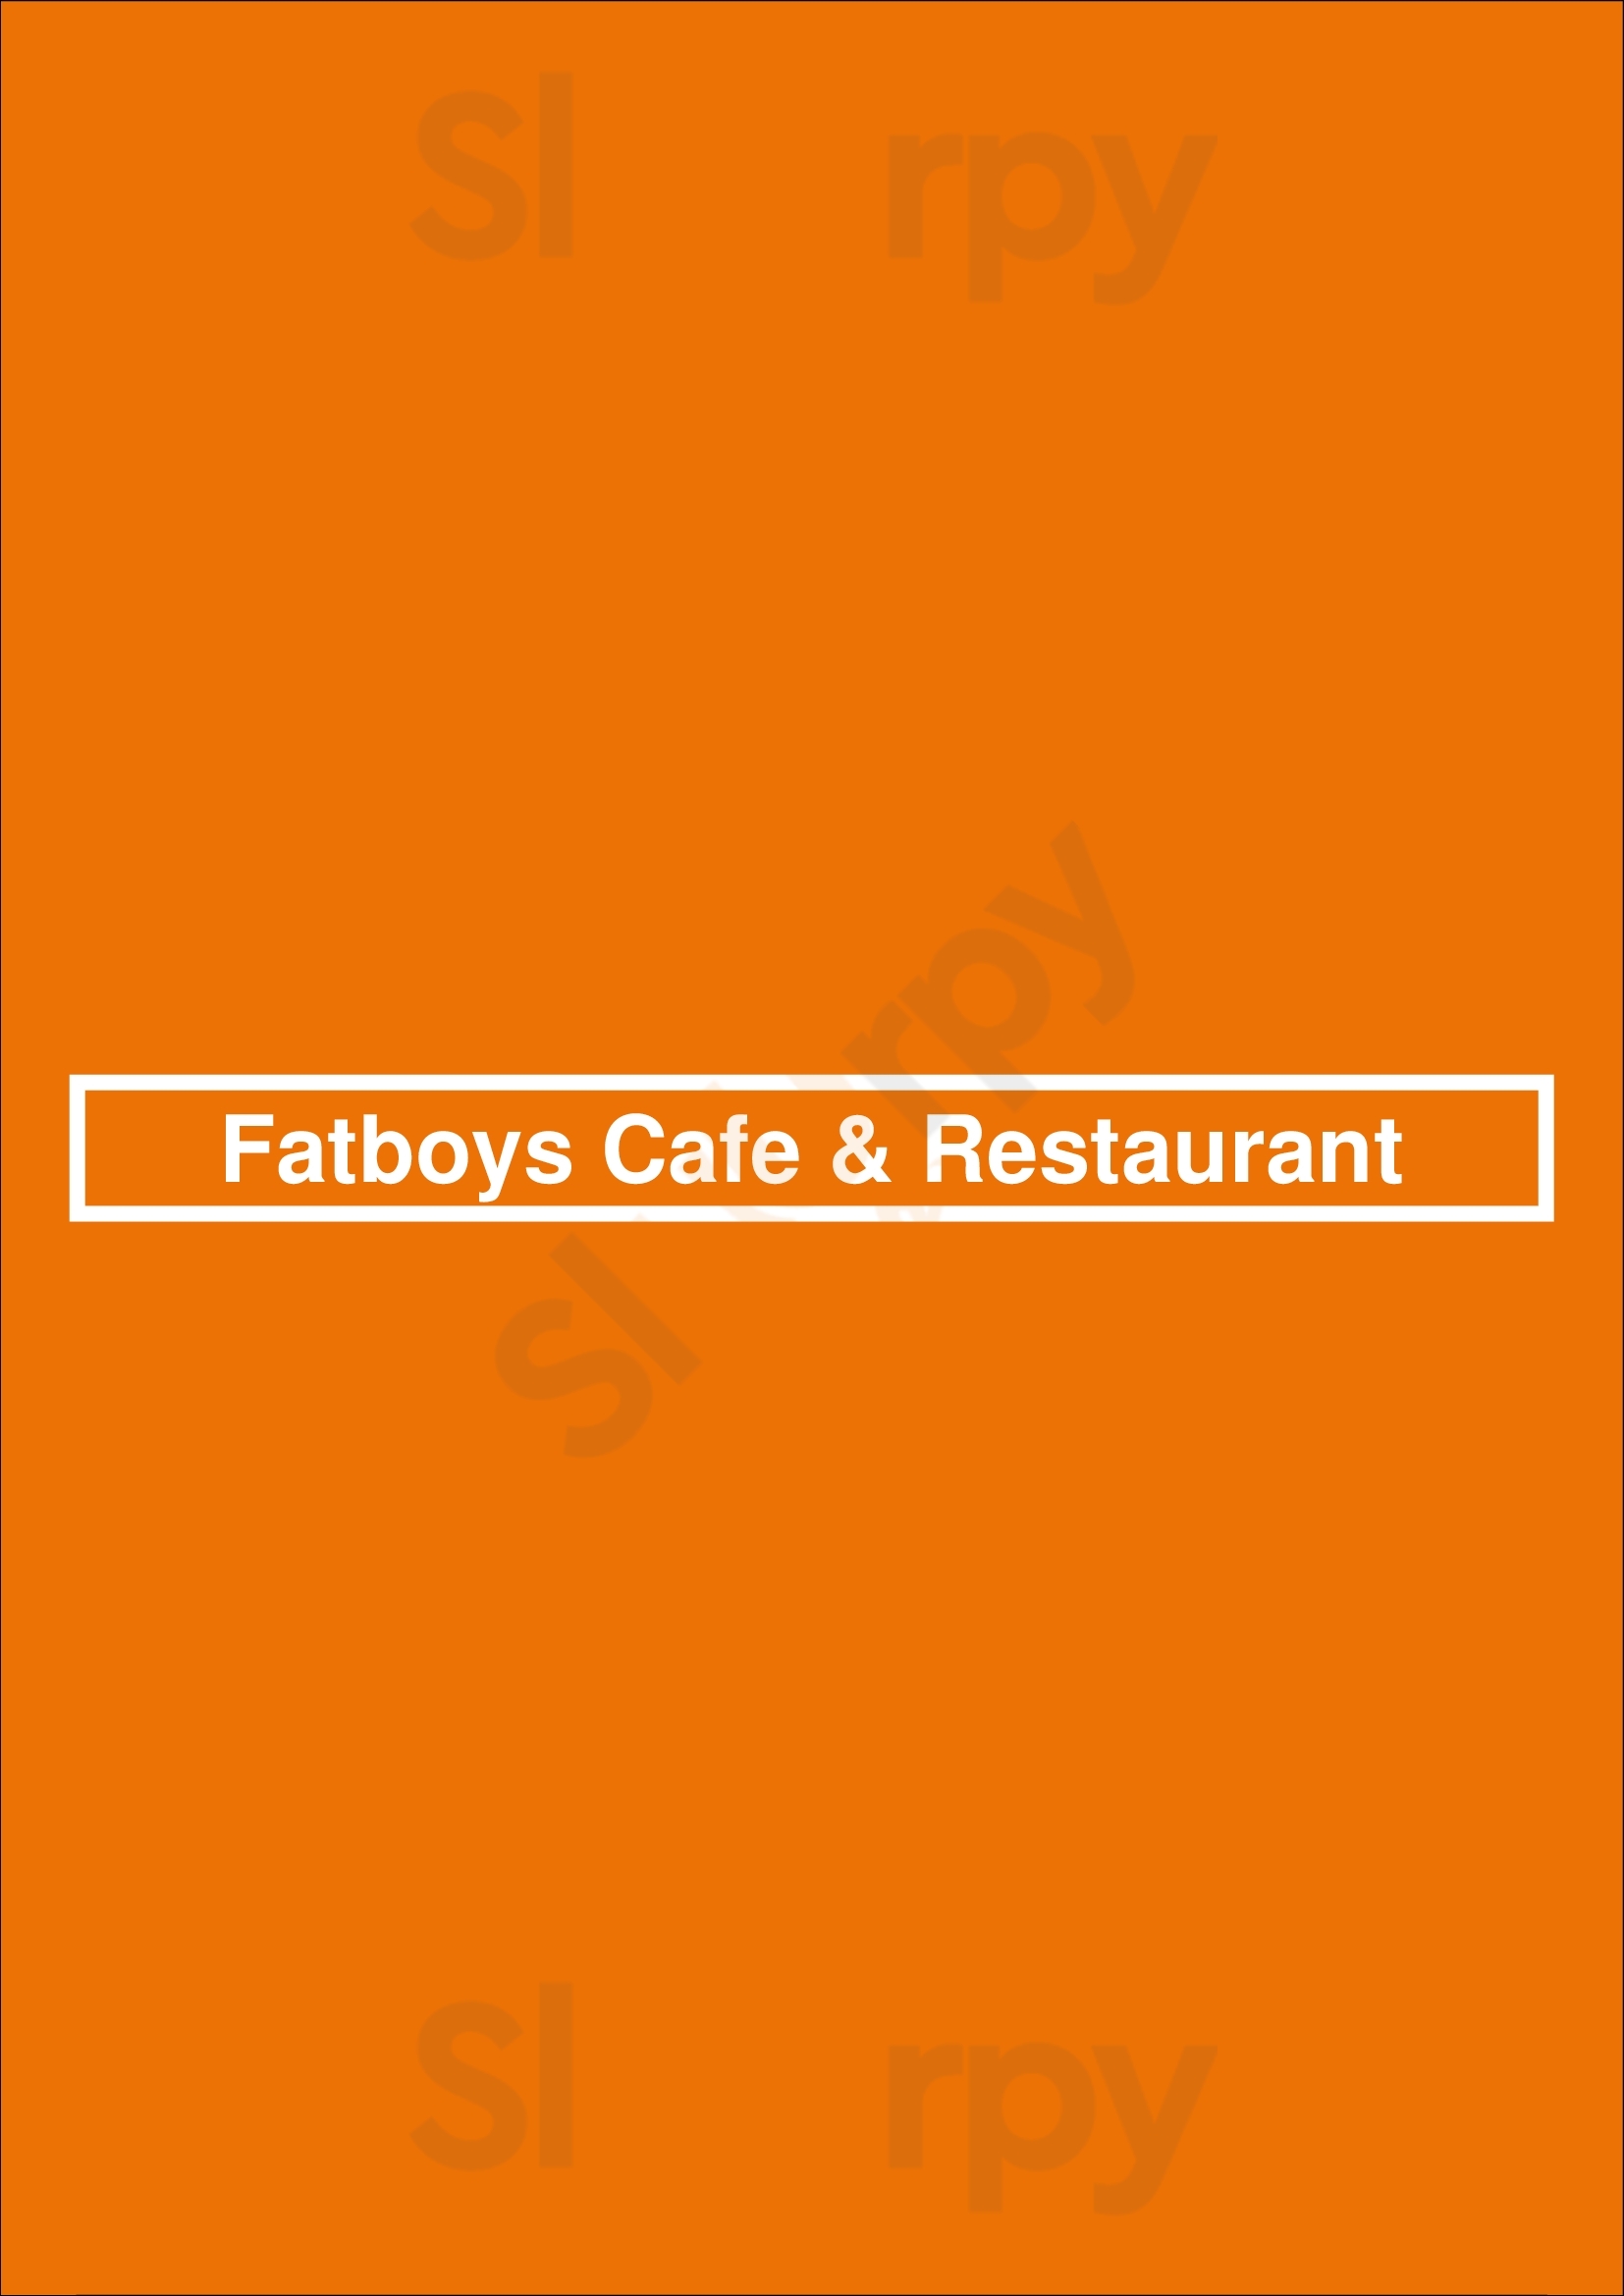 Fatboys Cafe & Restaurant Kingston upon Thames Menu - 1